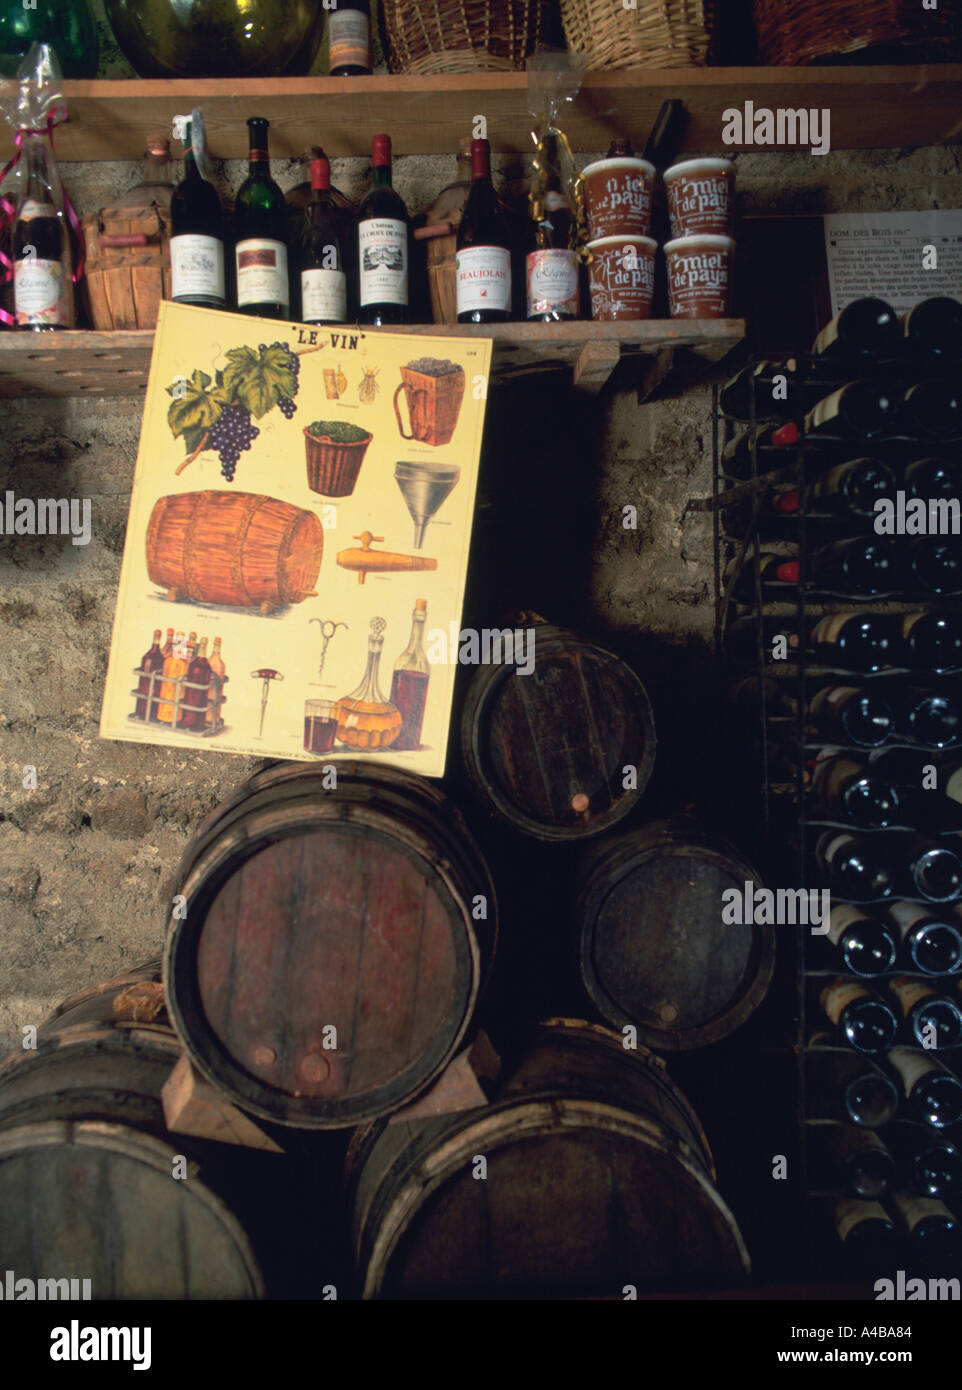 Winecellar in Beaujolais France bottles Stock Photo